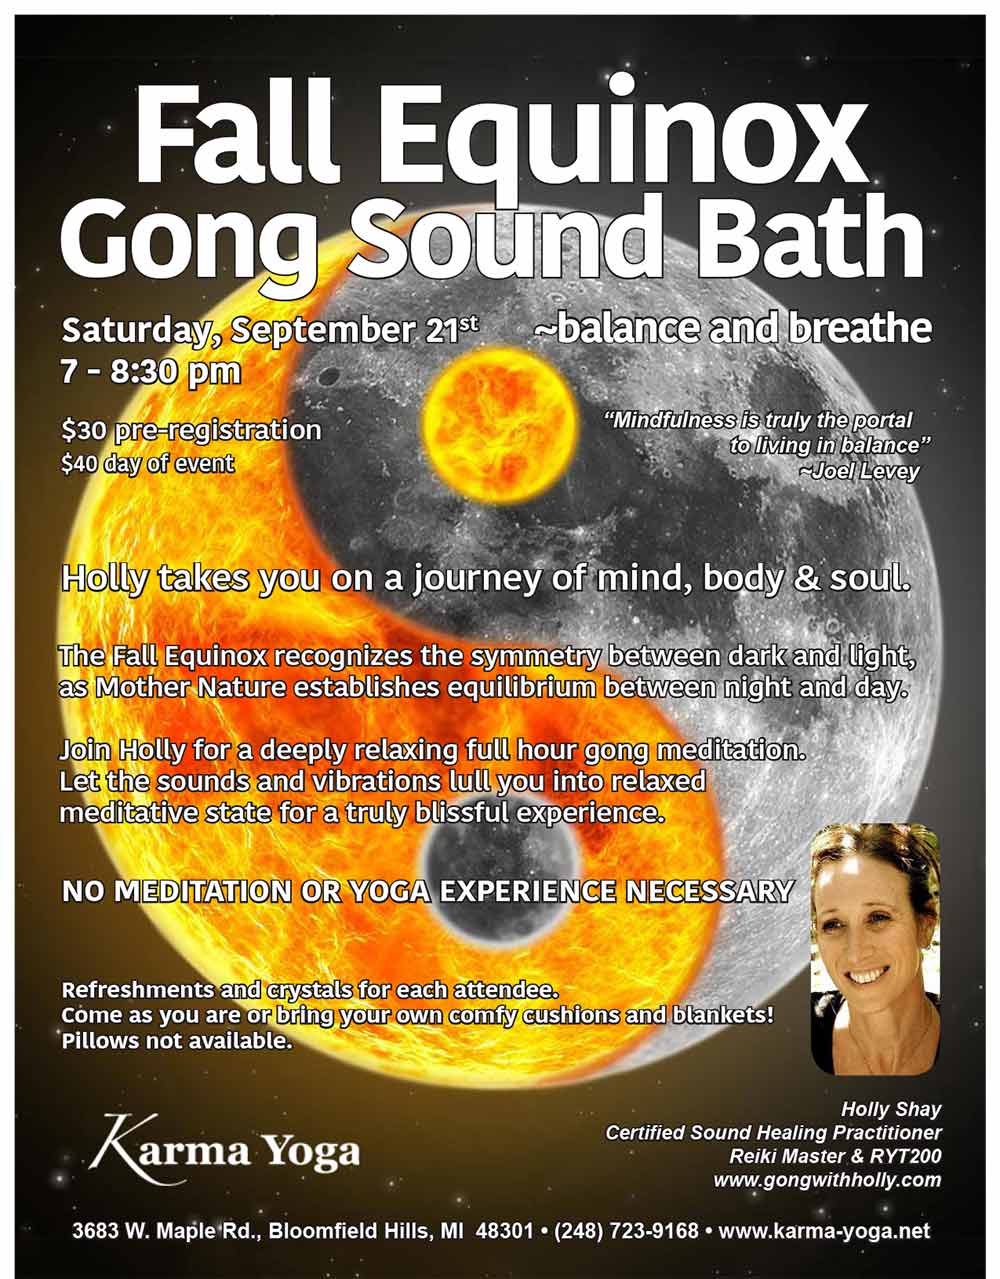 Fall Equinox Gong Sound Bath, Sept 21st, Karma Yoga, Bloomfield Hills